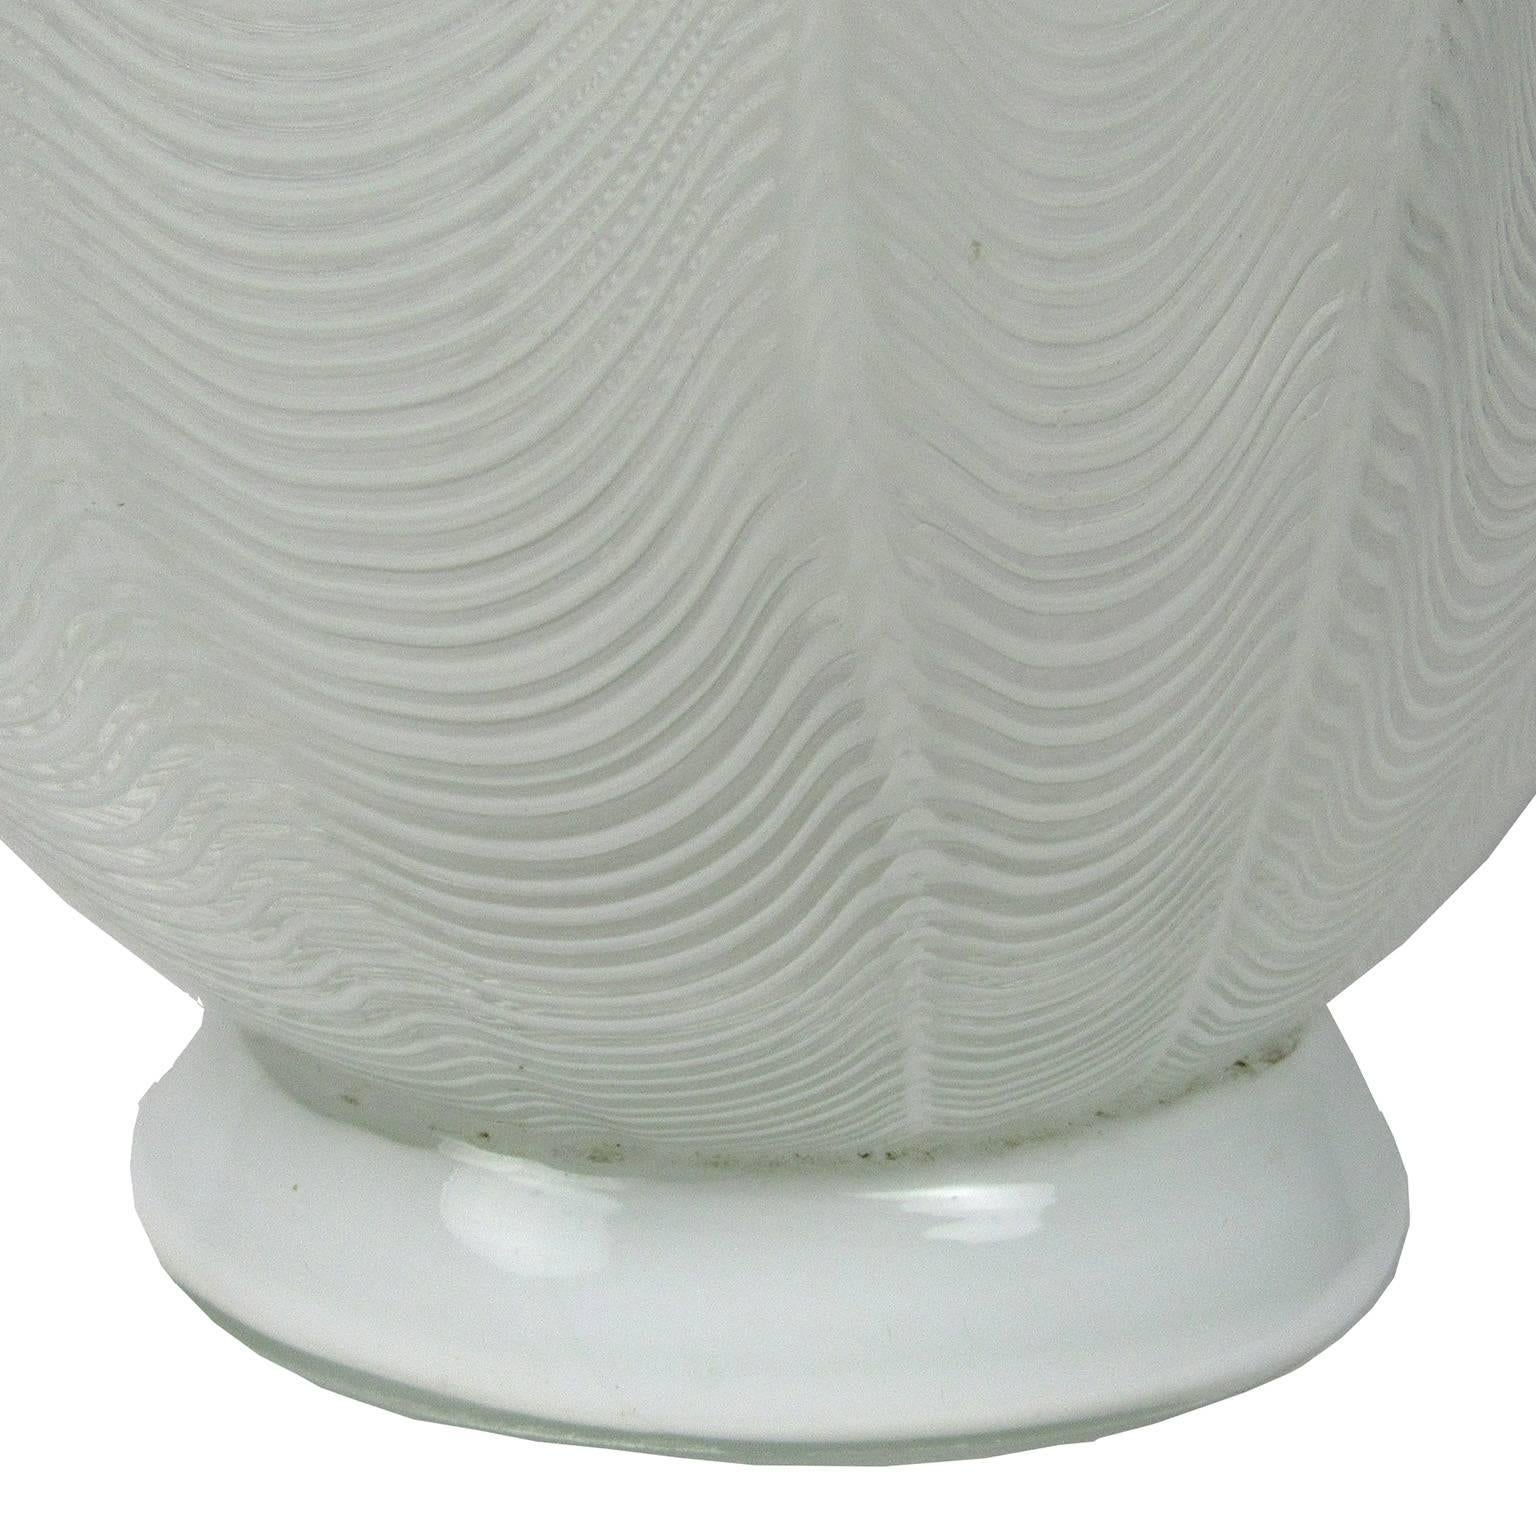 Murano white filigree handblown glass vase, unsigned. Height: 16 1/2 in., width: 9 in., depth: 5 in.